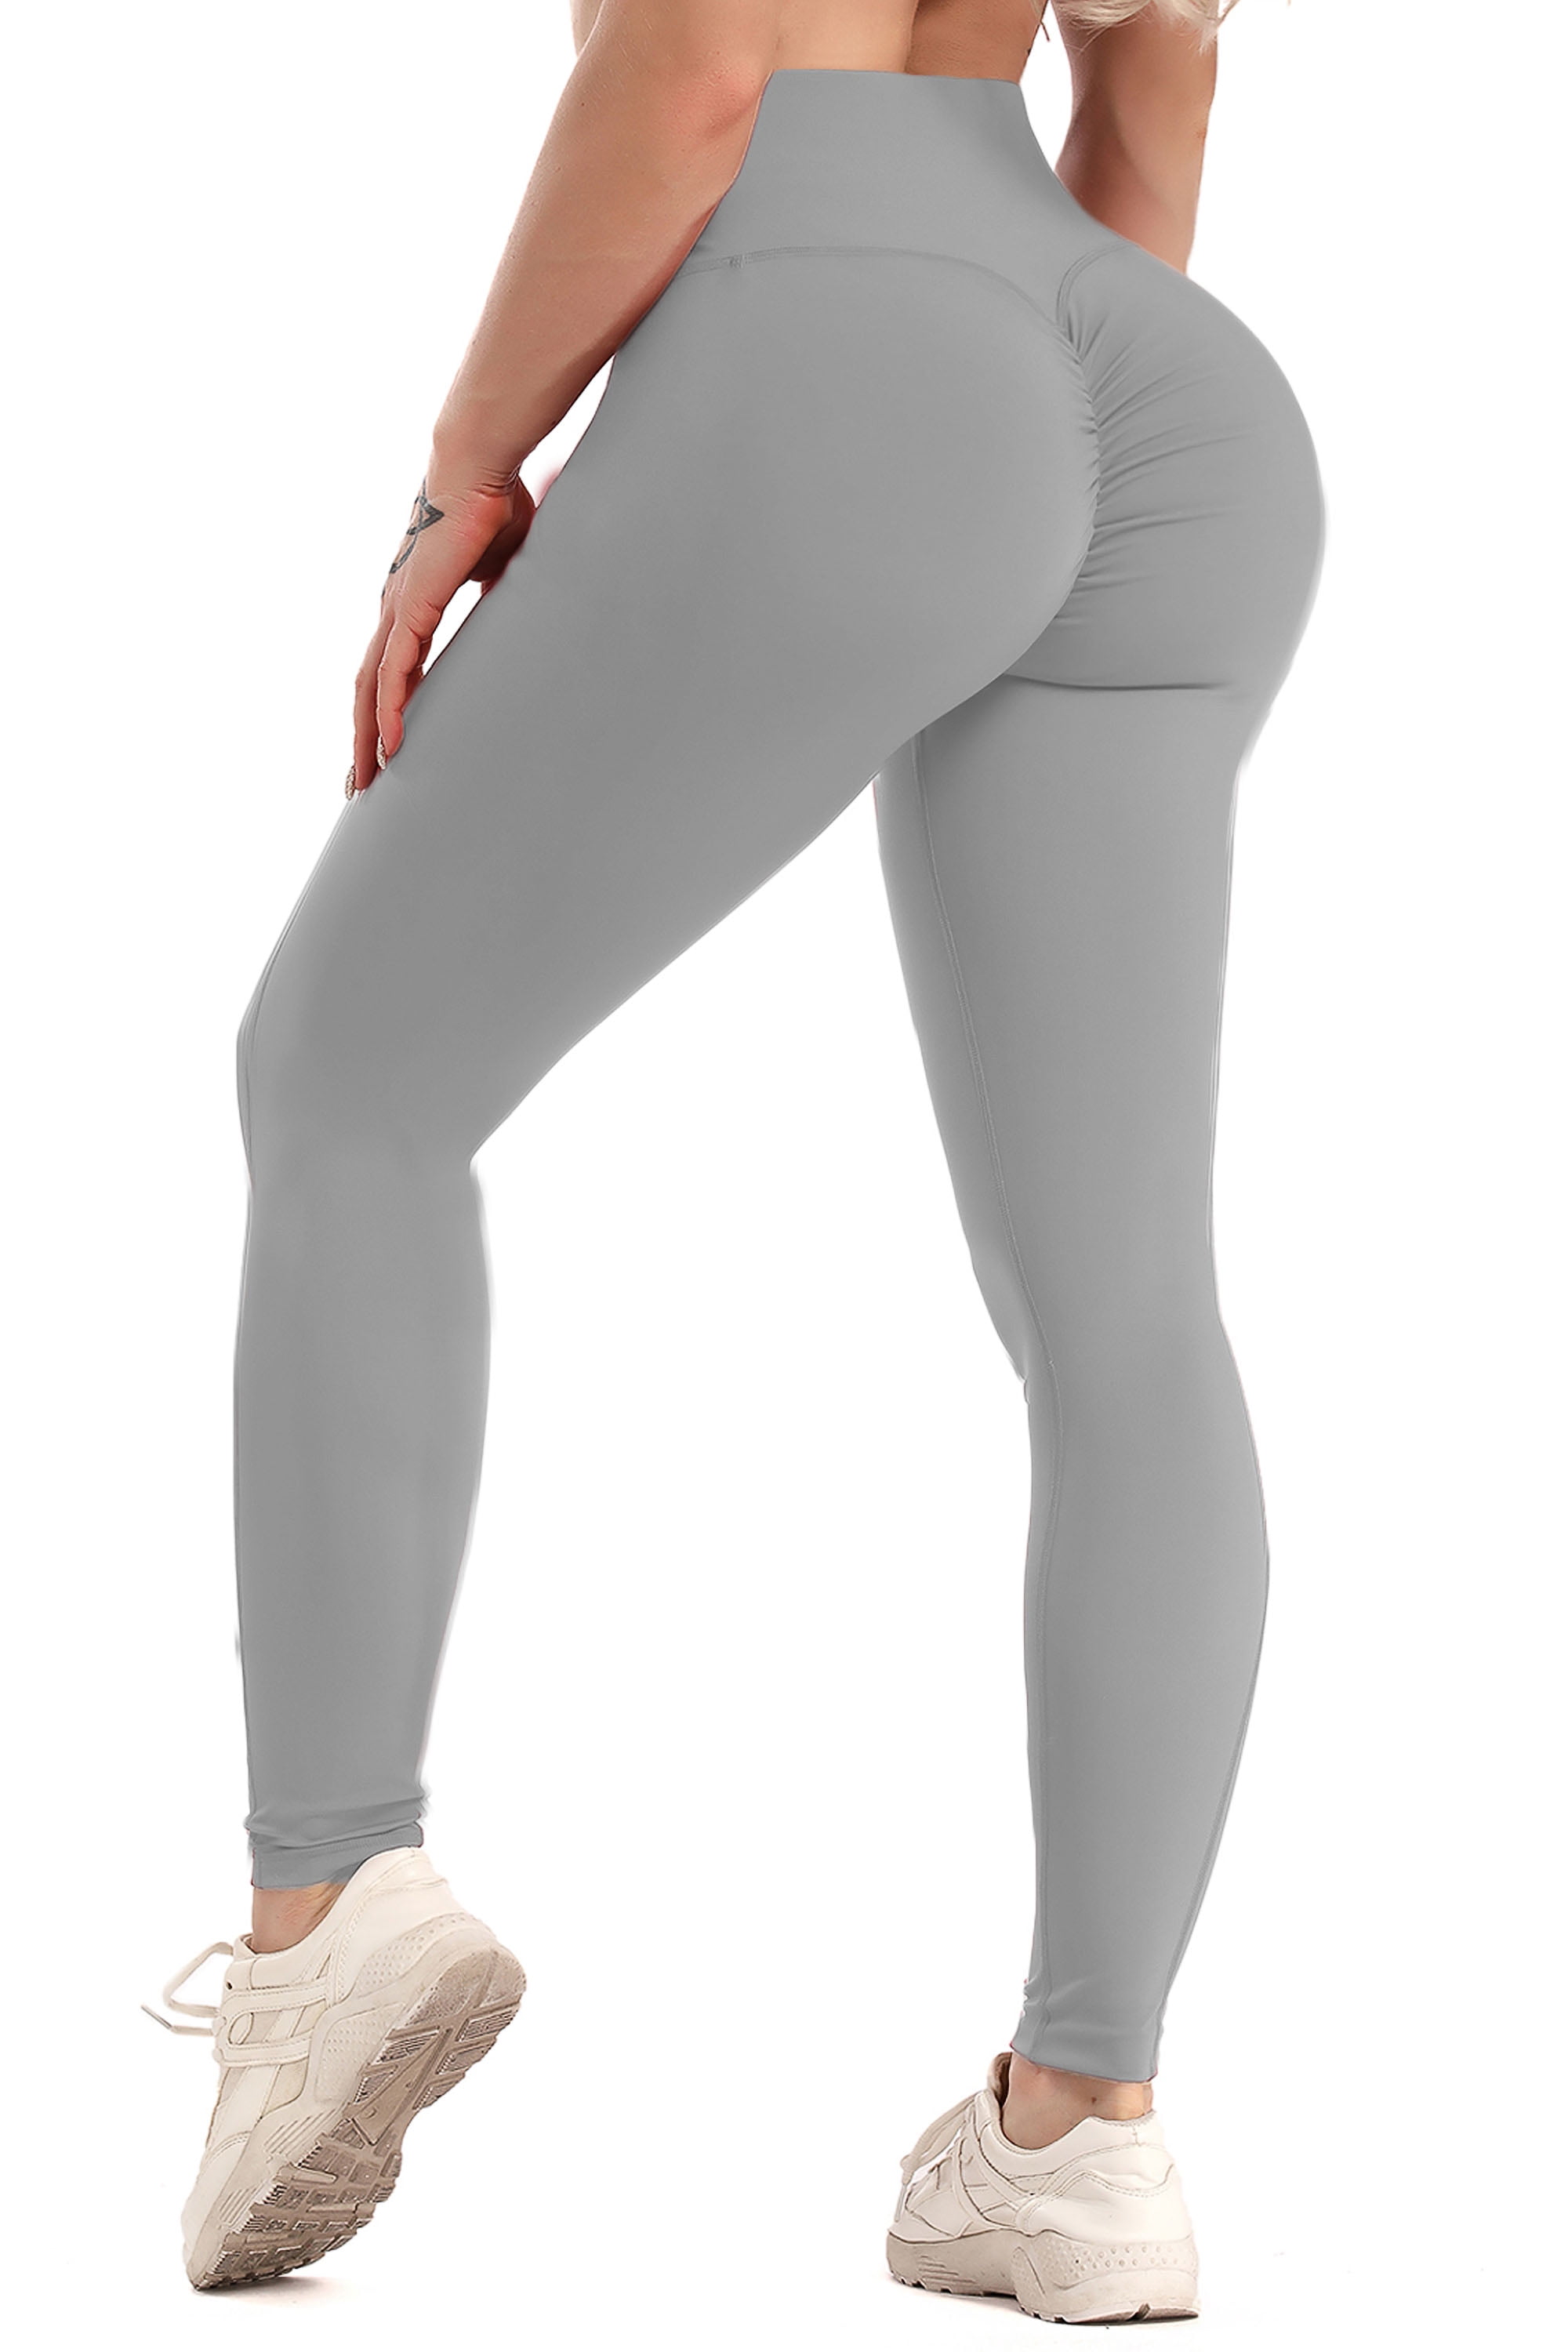 US Women's Ruch Booty Shorts Yoga Pants Sport Fitness High Waist Butt Lift Pants 